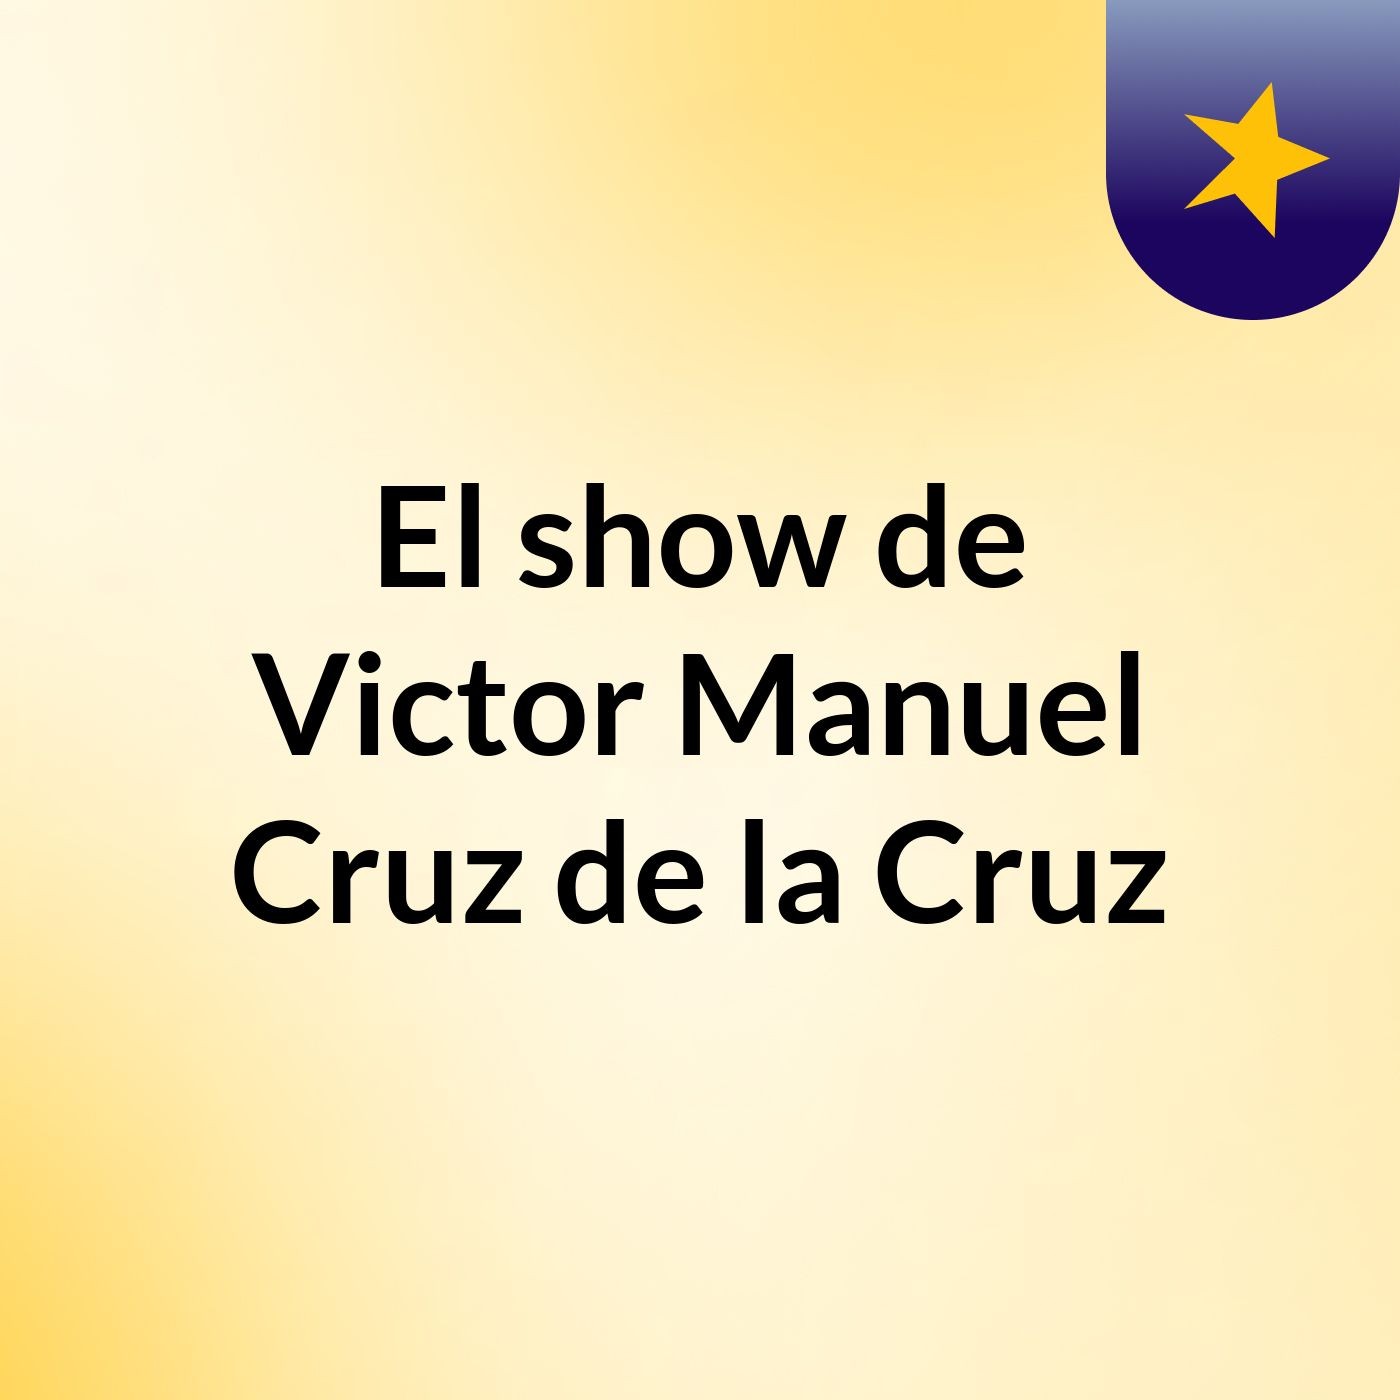 El show de Victor Manuel Cruz de la Cruz